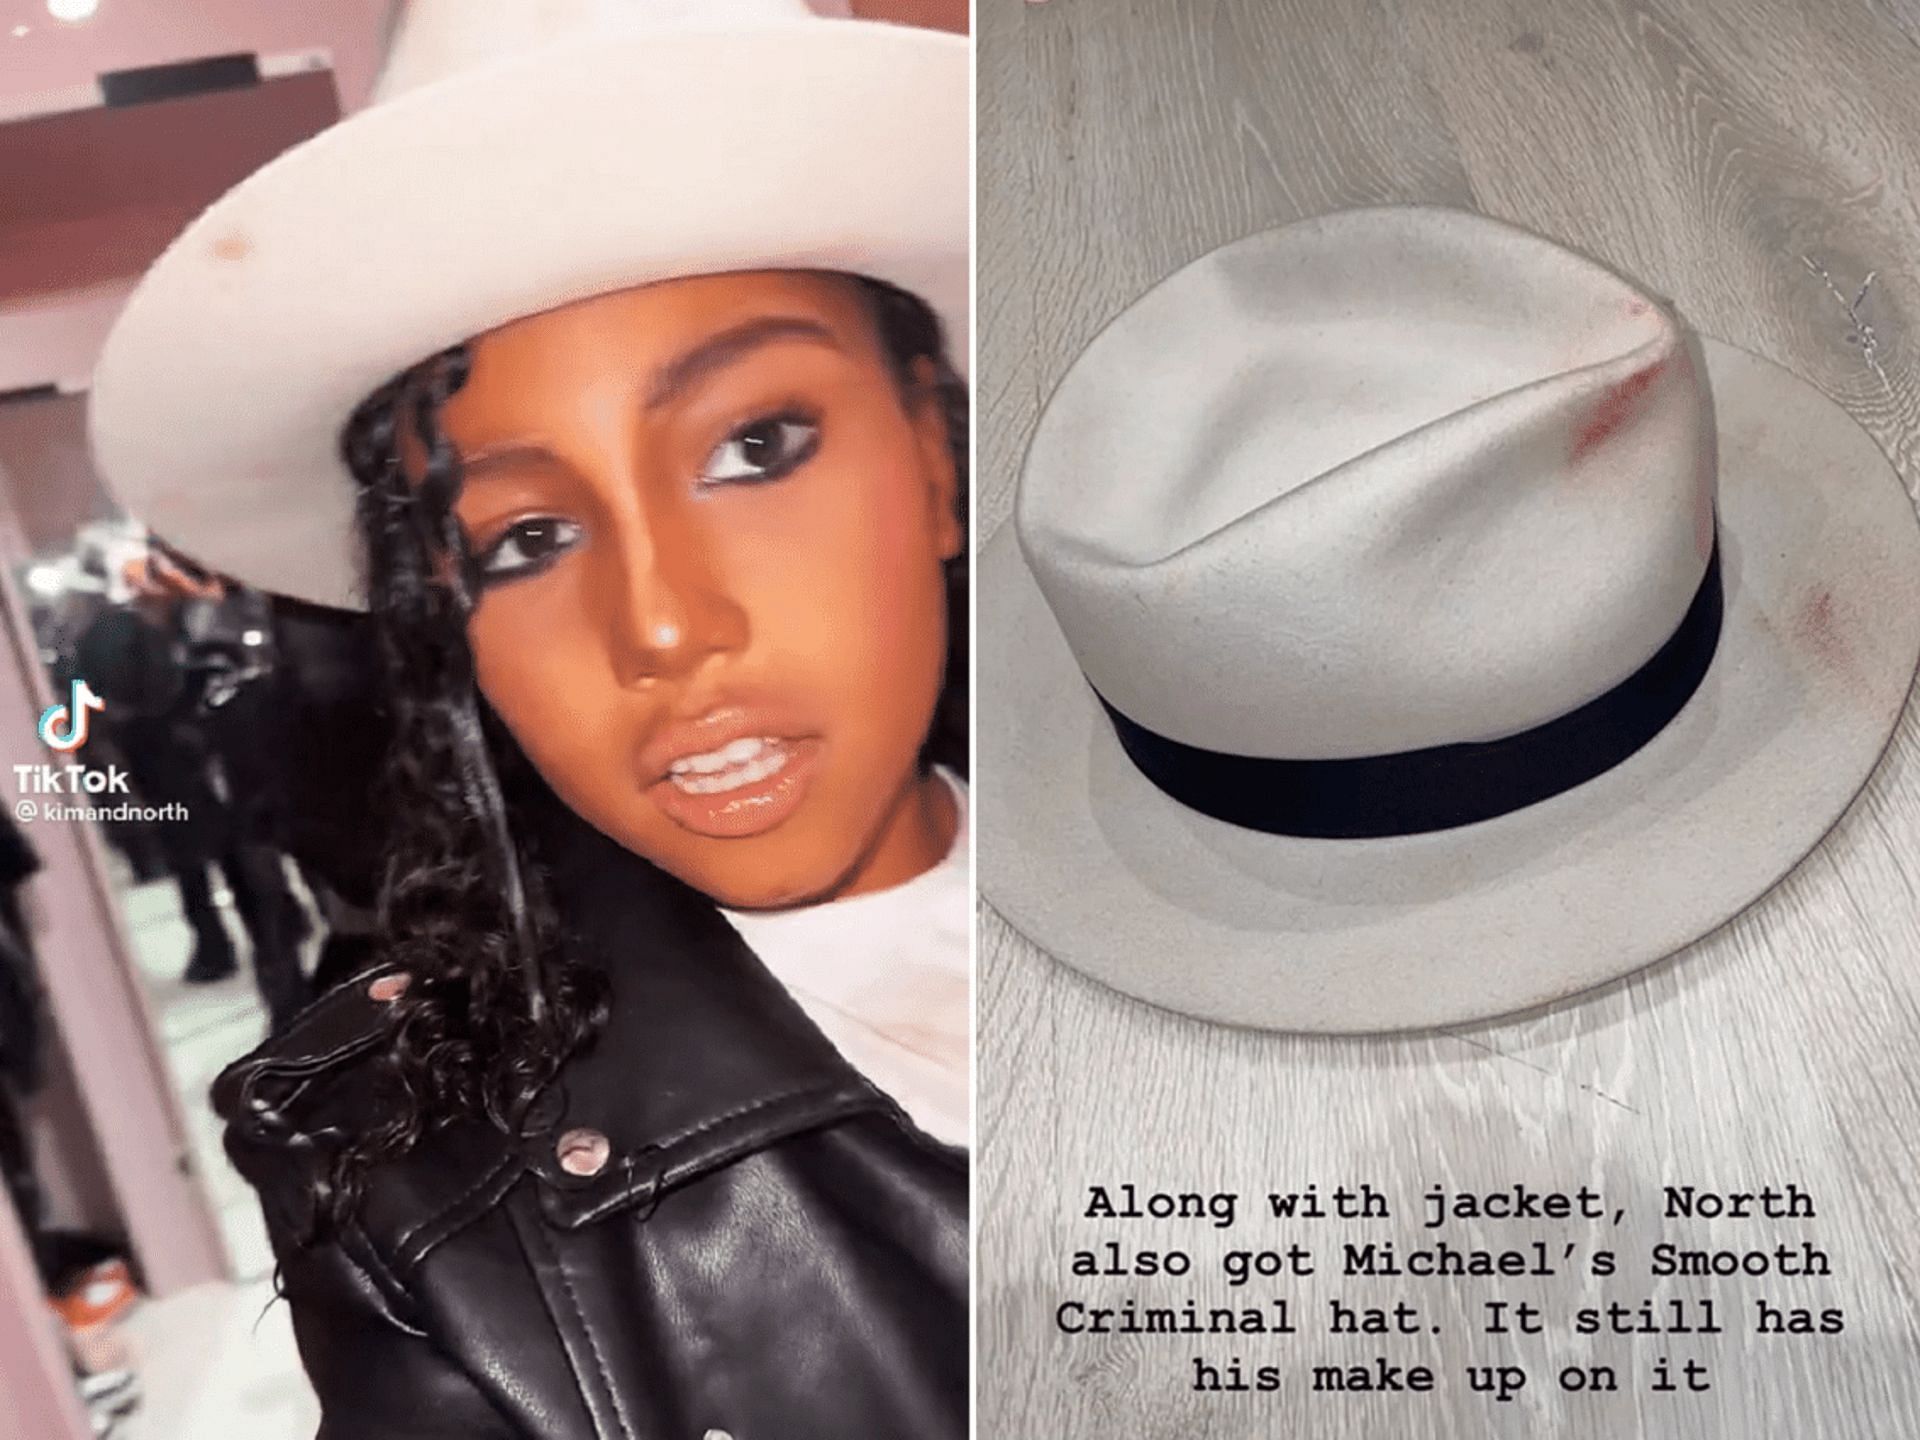 Kim Kardashian also bought Michael Jackson's Smooth Criminal hat